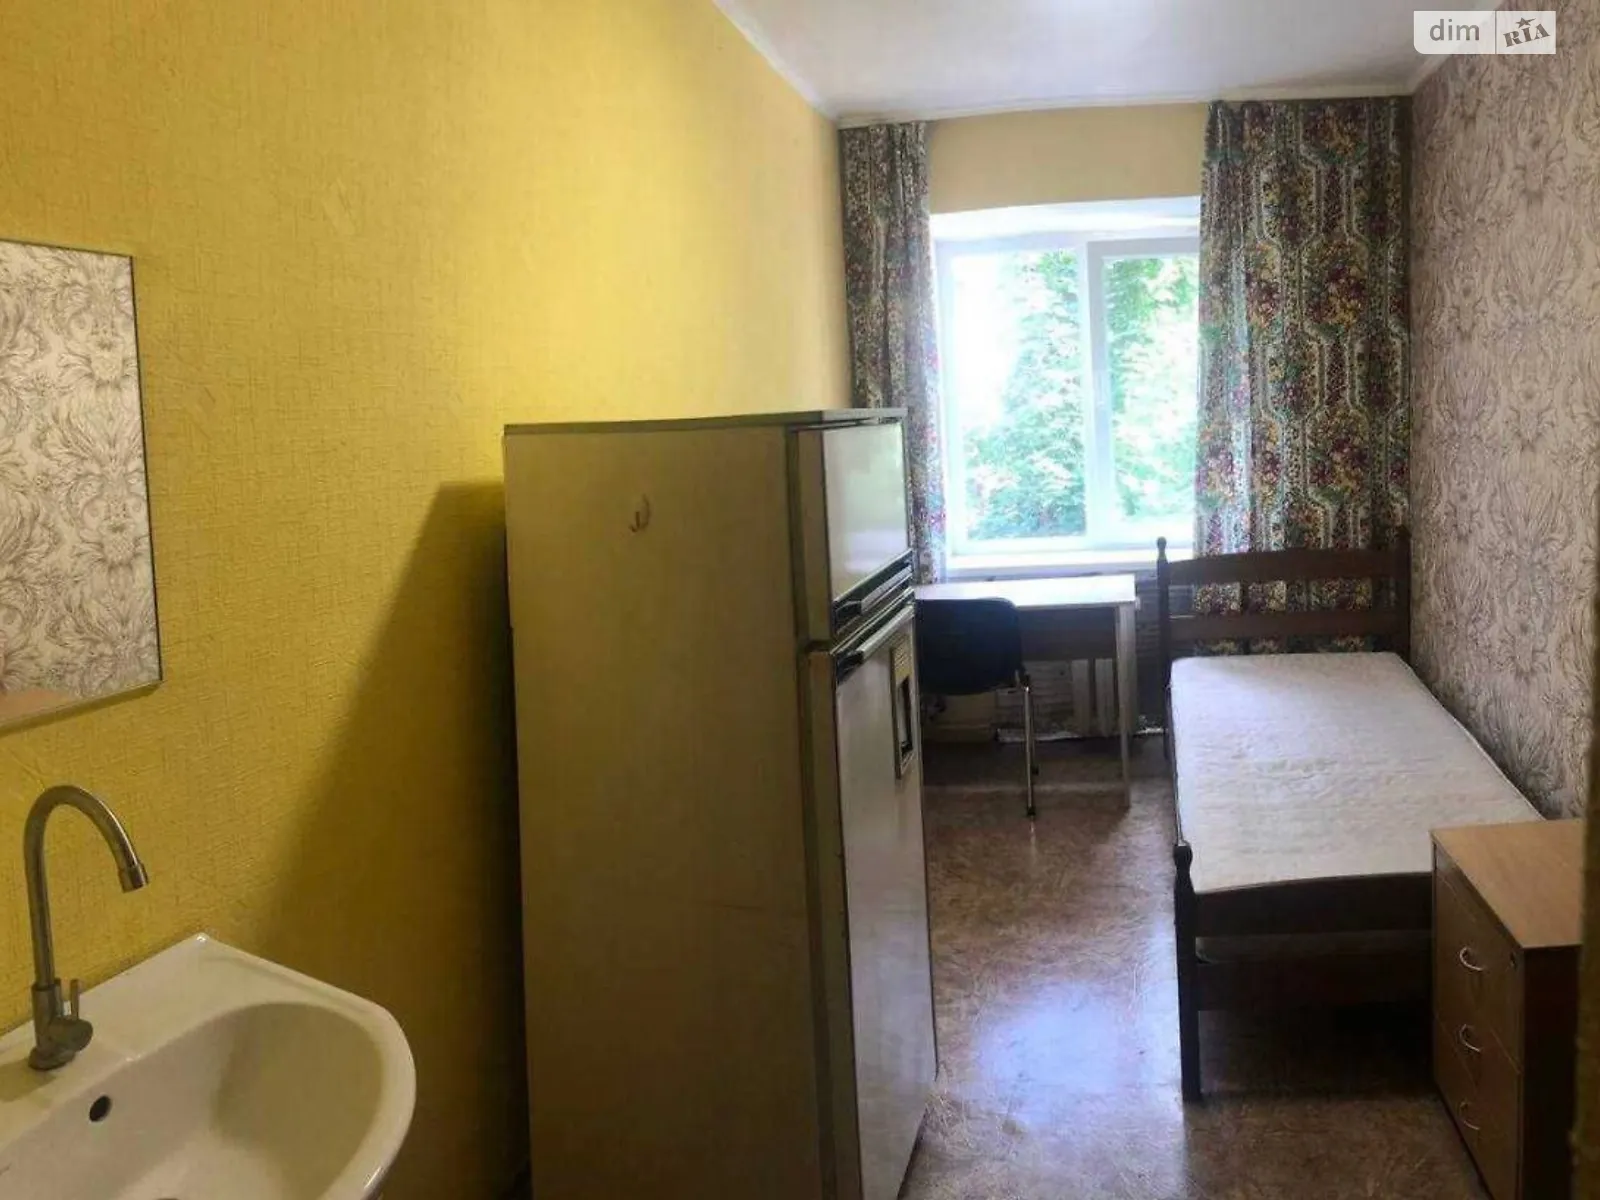 Продается комната 46 кв. м в Харькове - фото 2